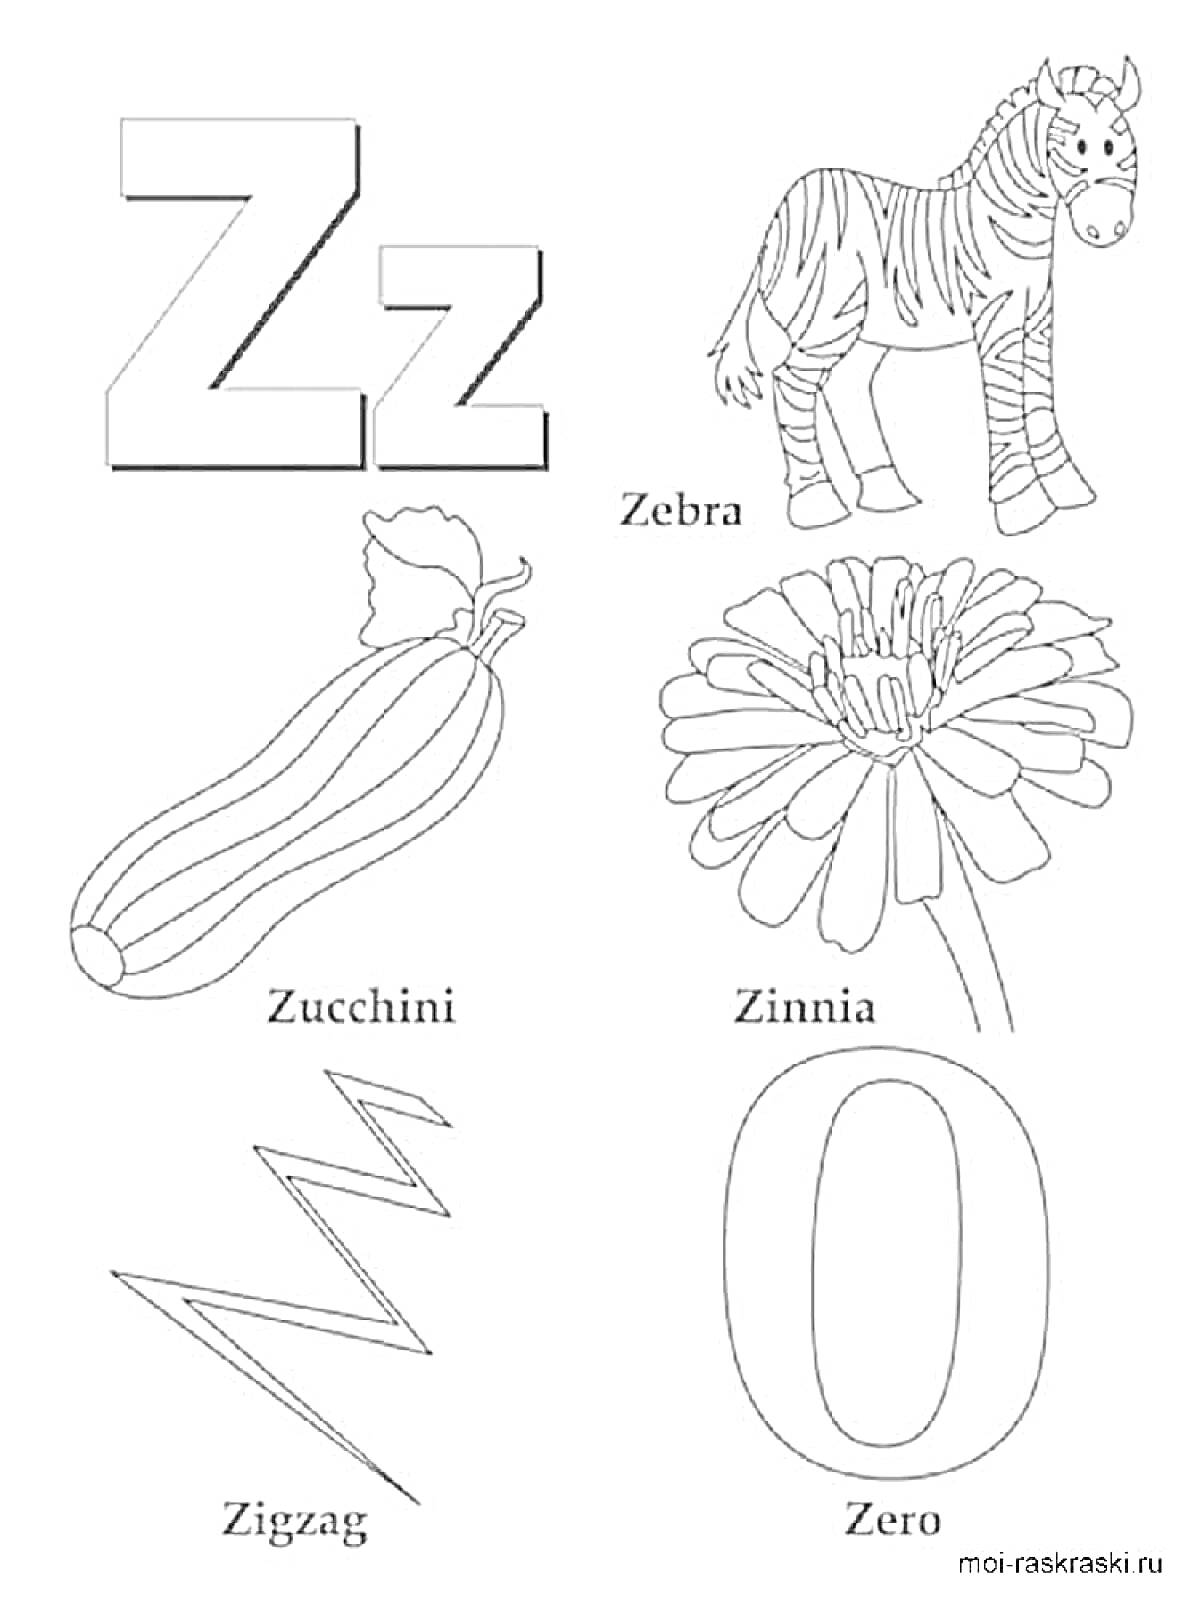 Раскраска Английский алфавит - буква Z с изображениями и подписями Zebra, Zucchini, Zinnia, Zigzag, Zero